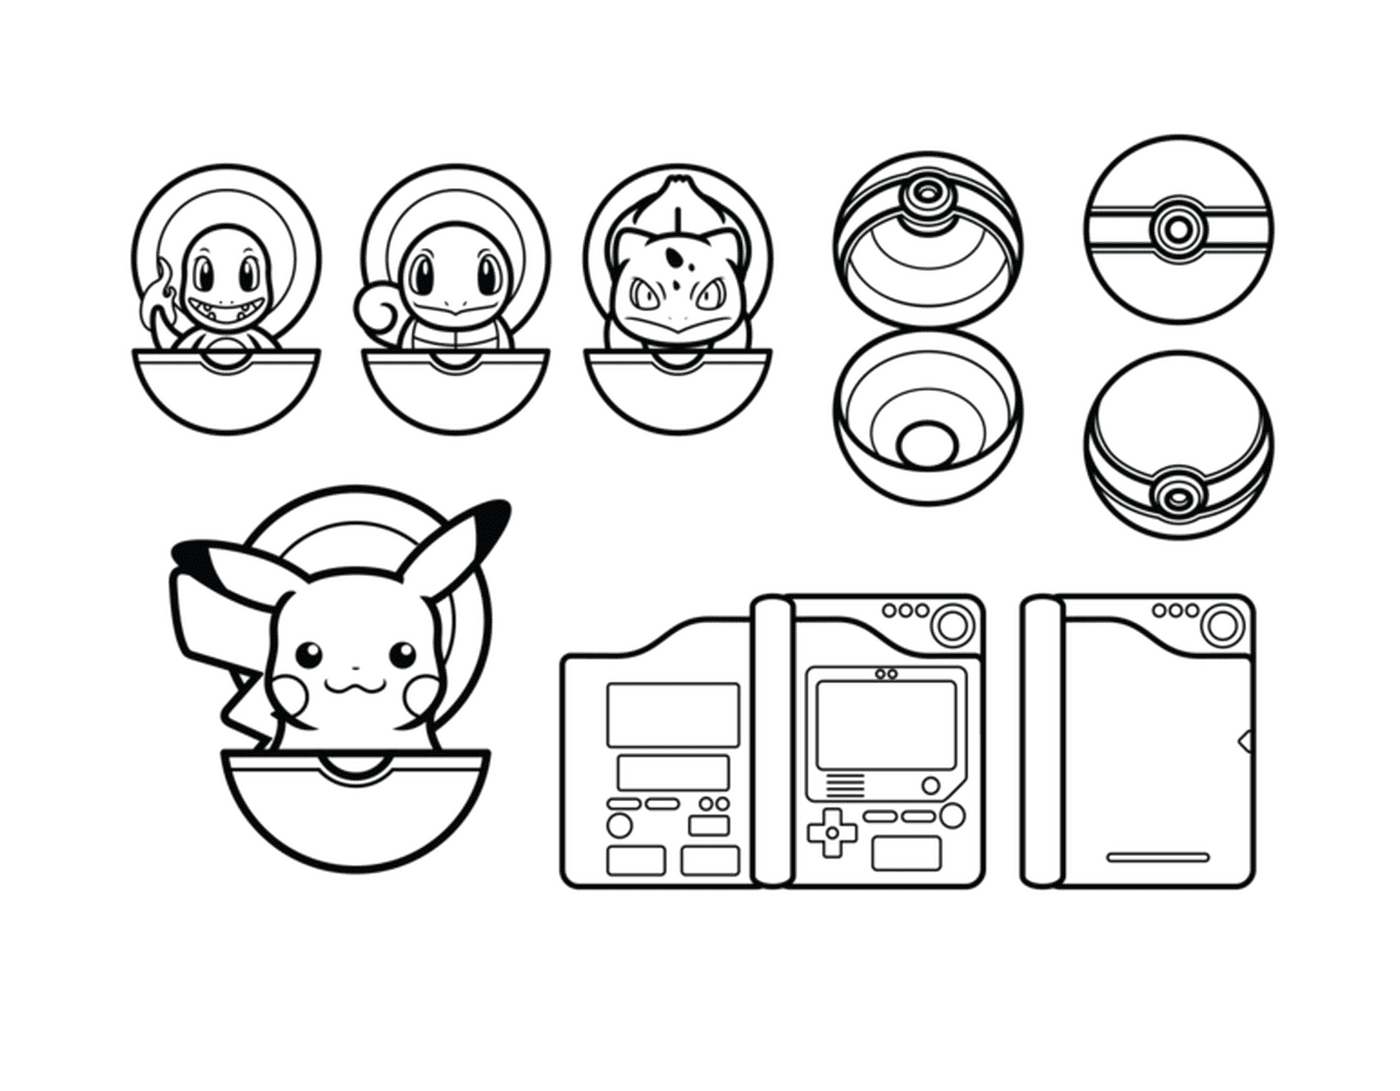  Pikachu and Pokéball, diversity of captivating illustrations 